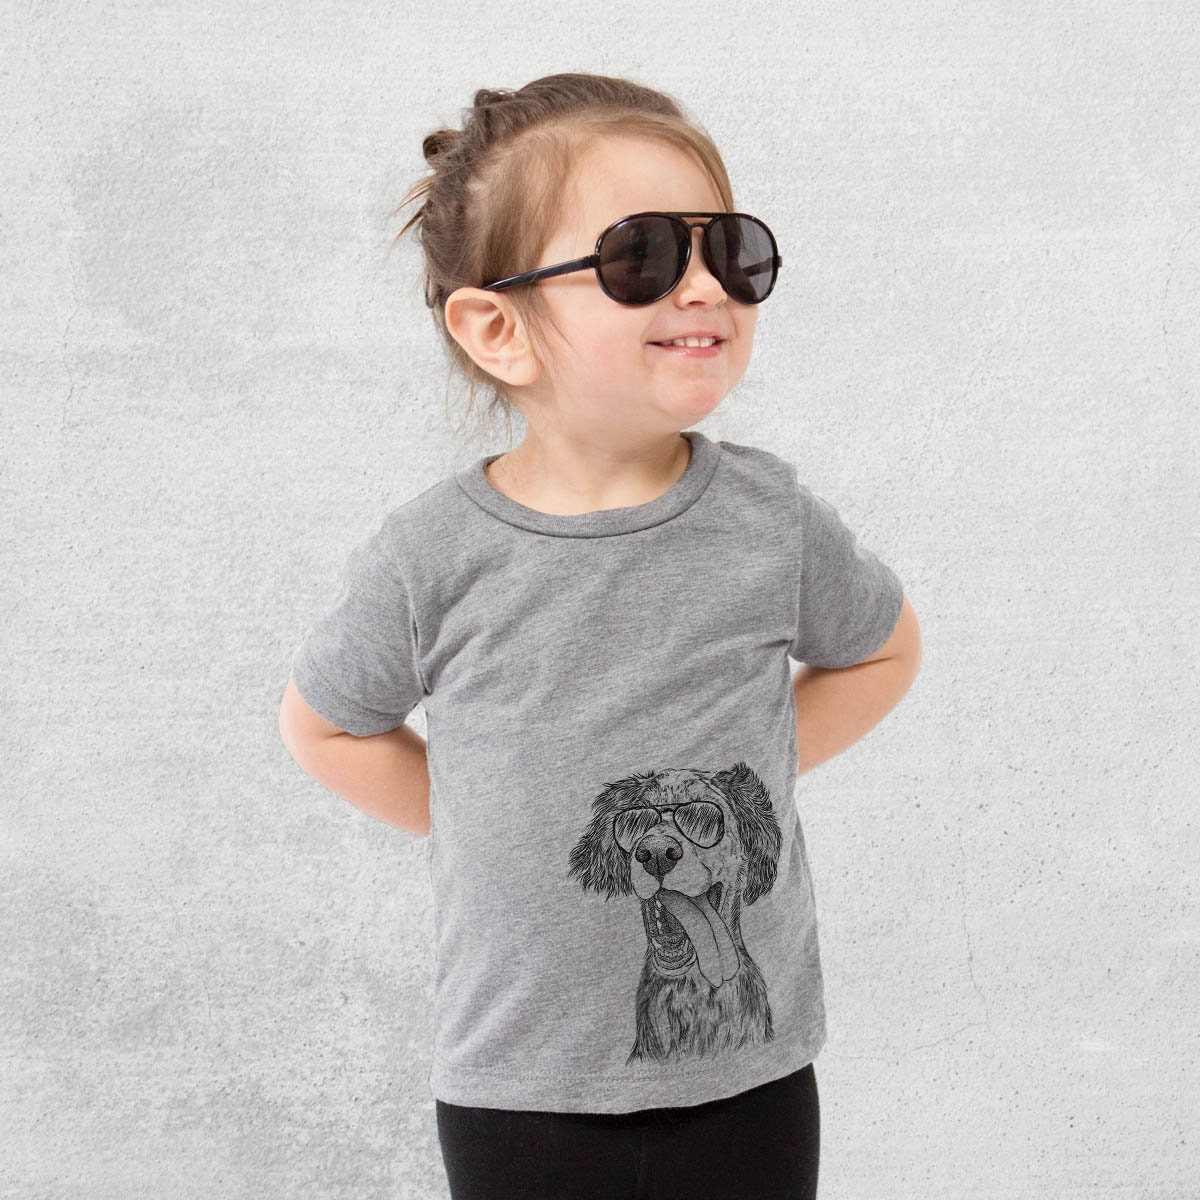 Renly The English Setter - Tri-Blend Shirt Kids Dog Tshirt Animal Glasses T